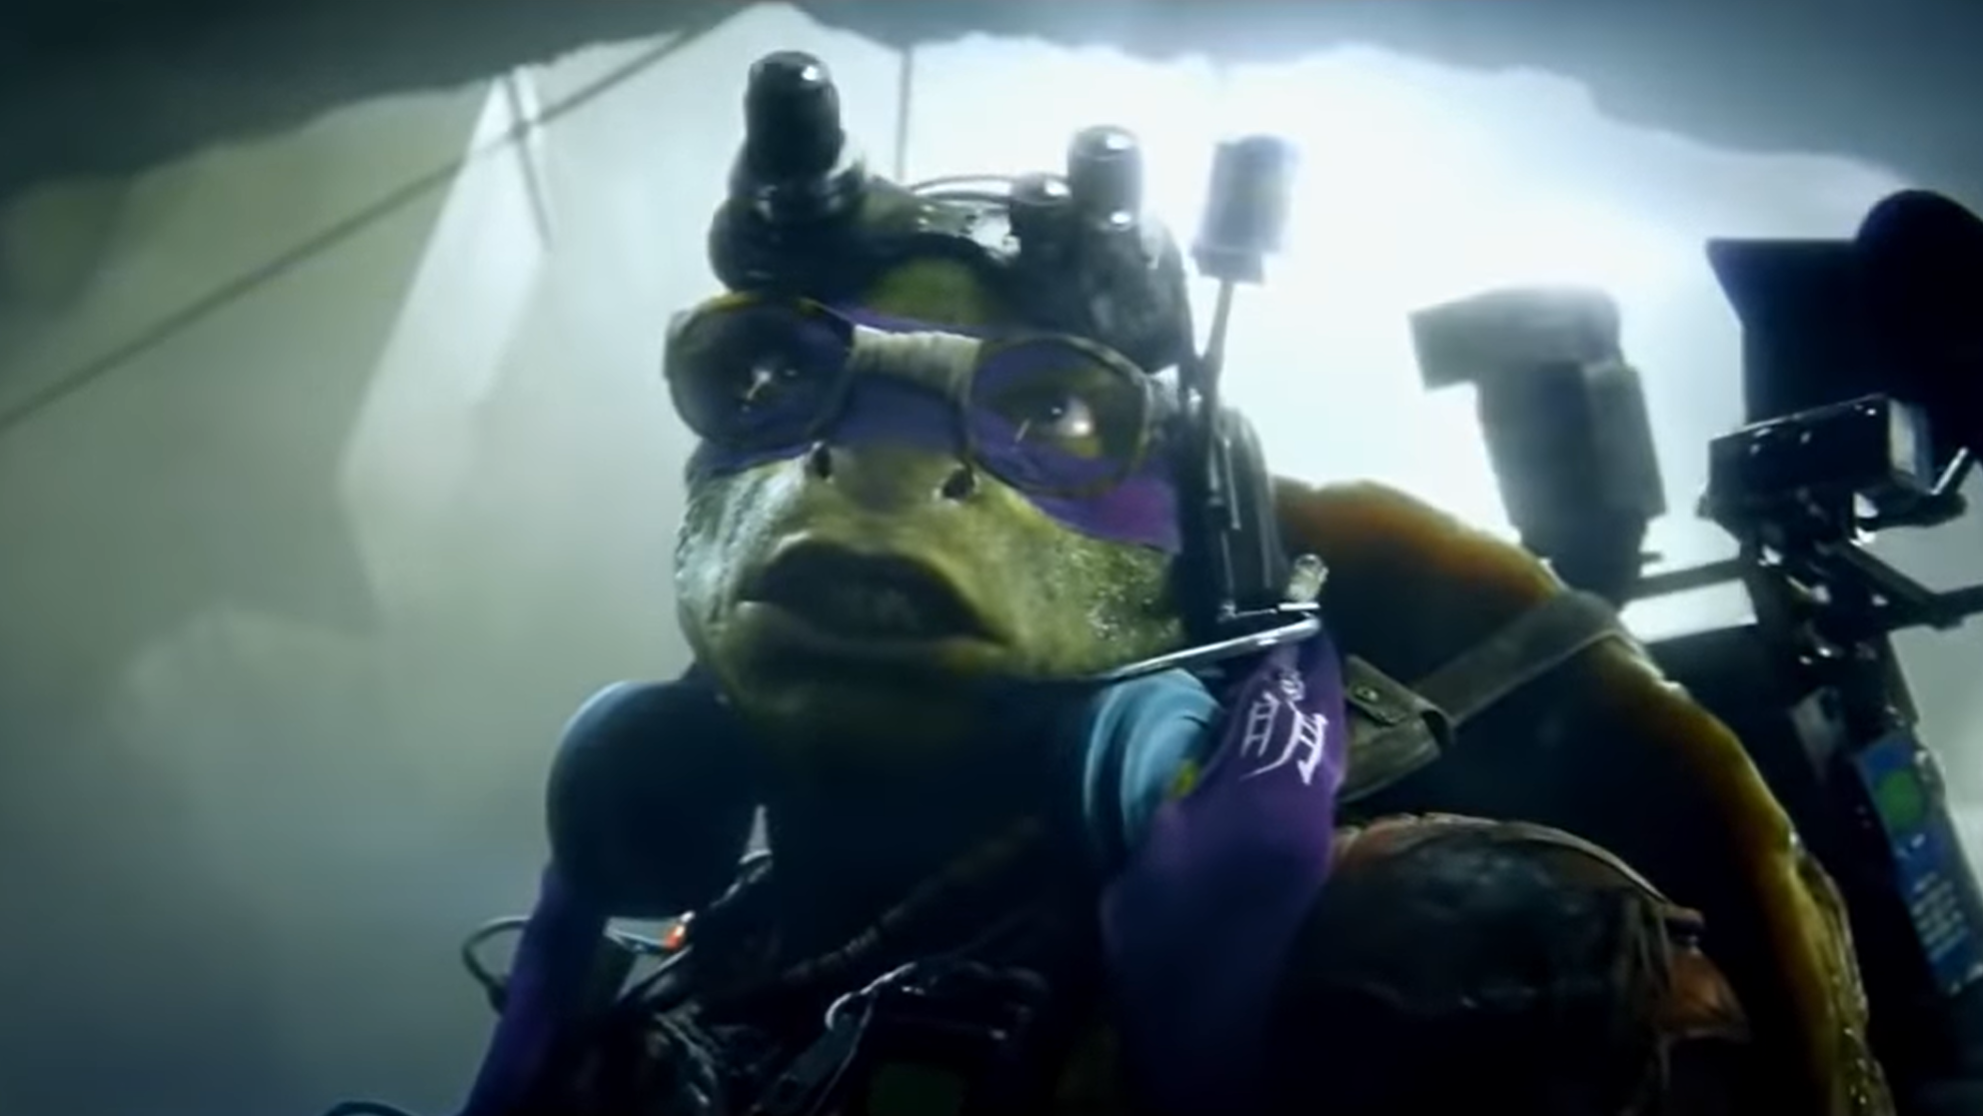 Donatello decked out in tech gear in "Teenage Mutant Ninja Turtles" 2014.